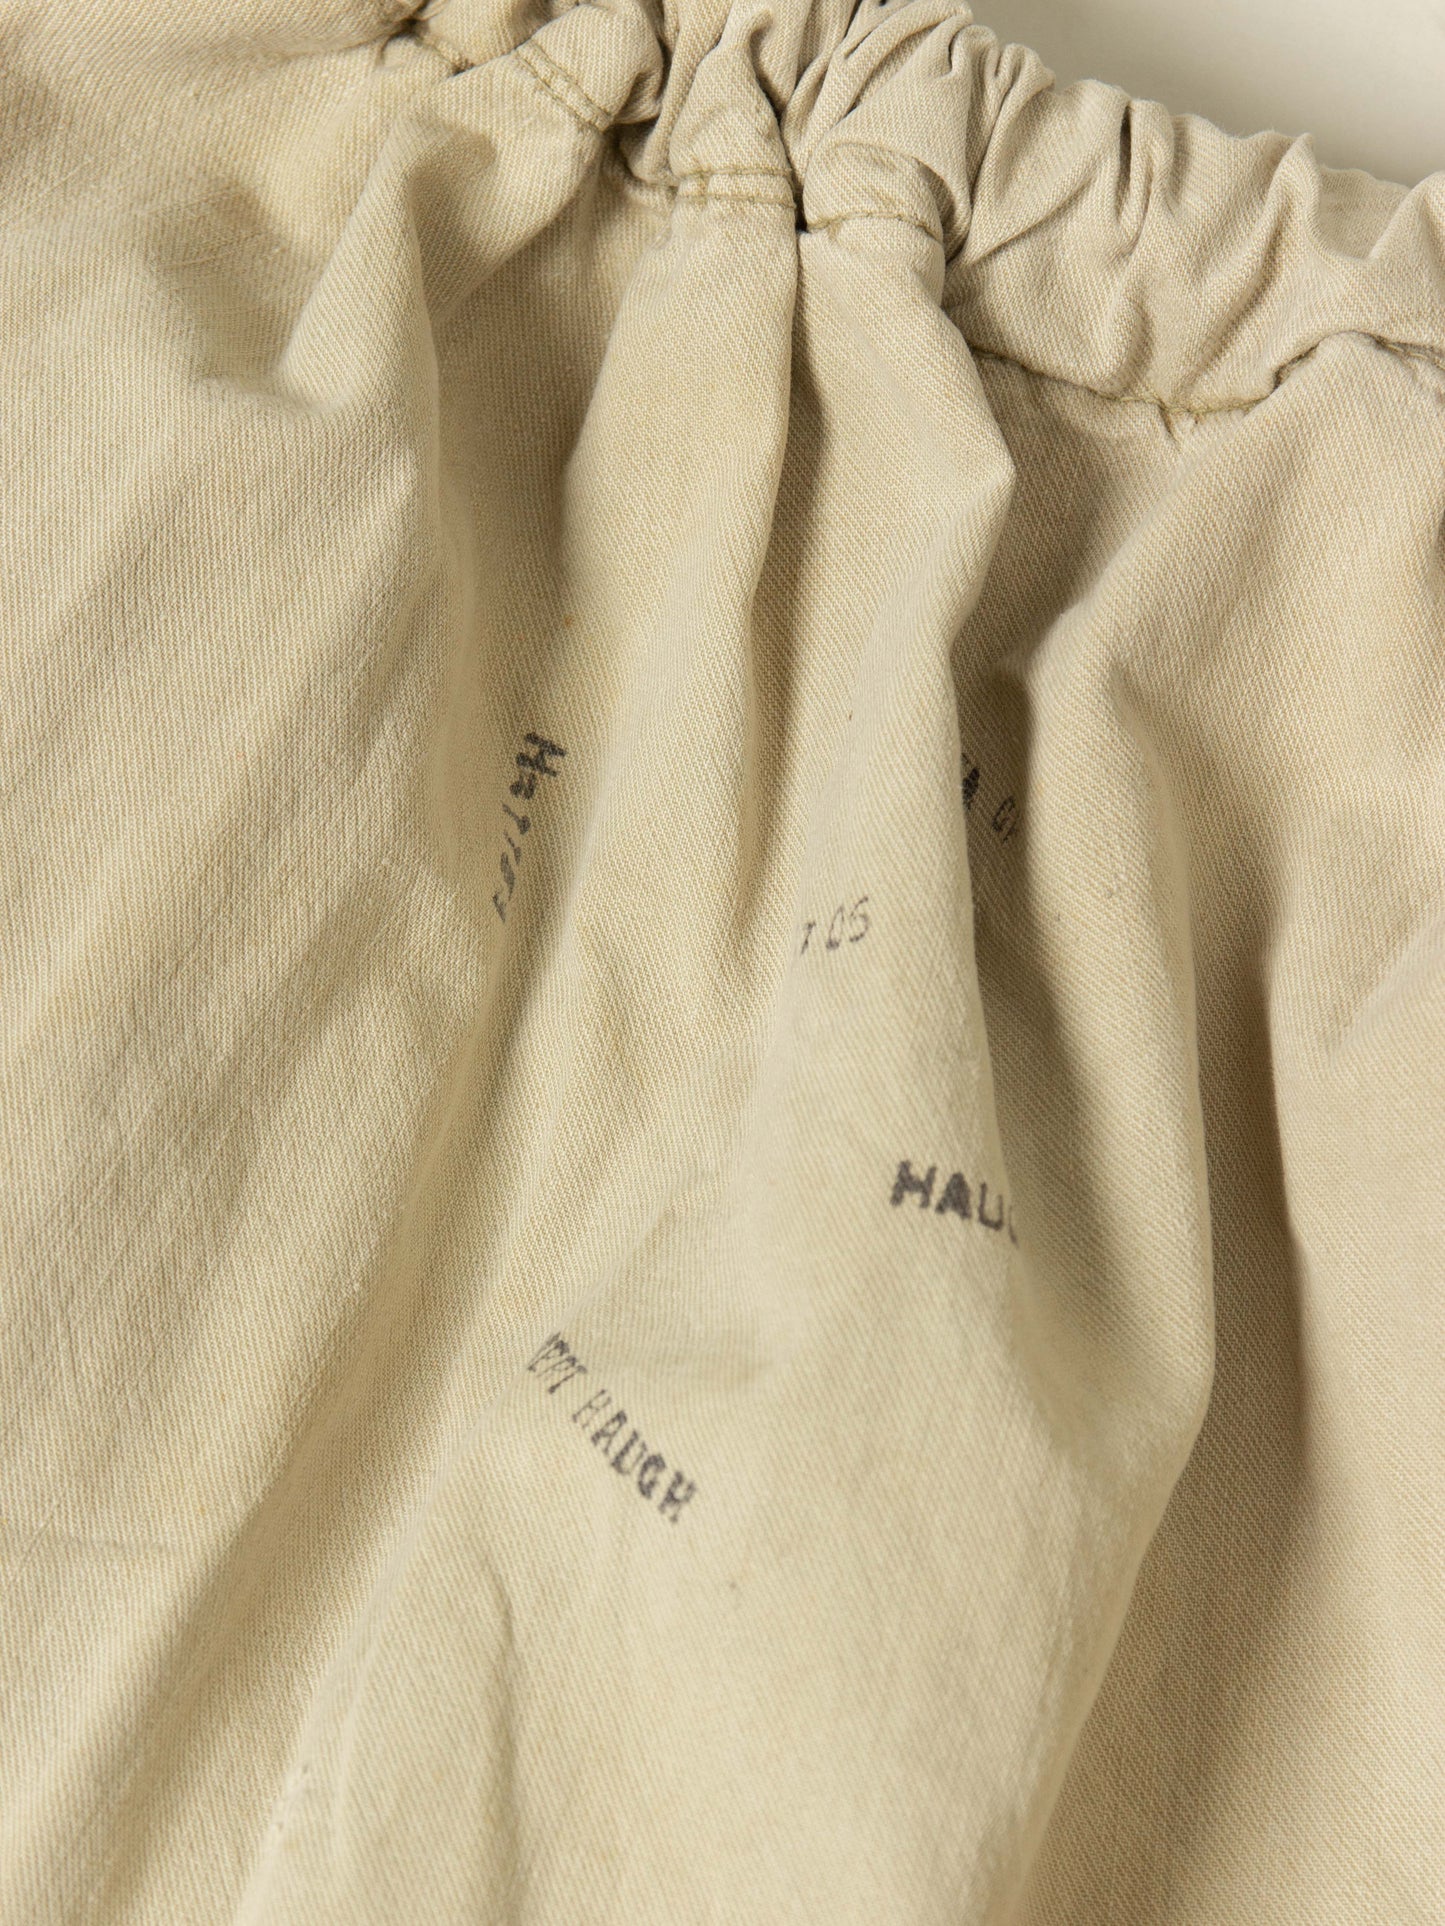 Vtg 1940s US Army Cotton Laundry Bag